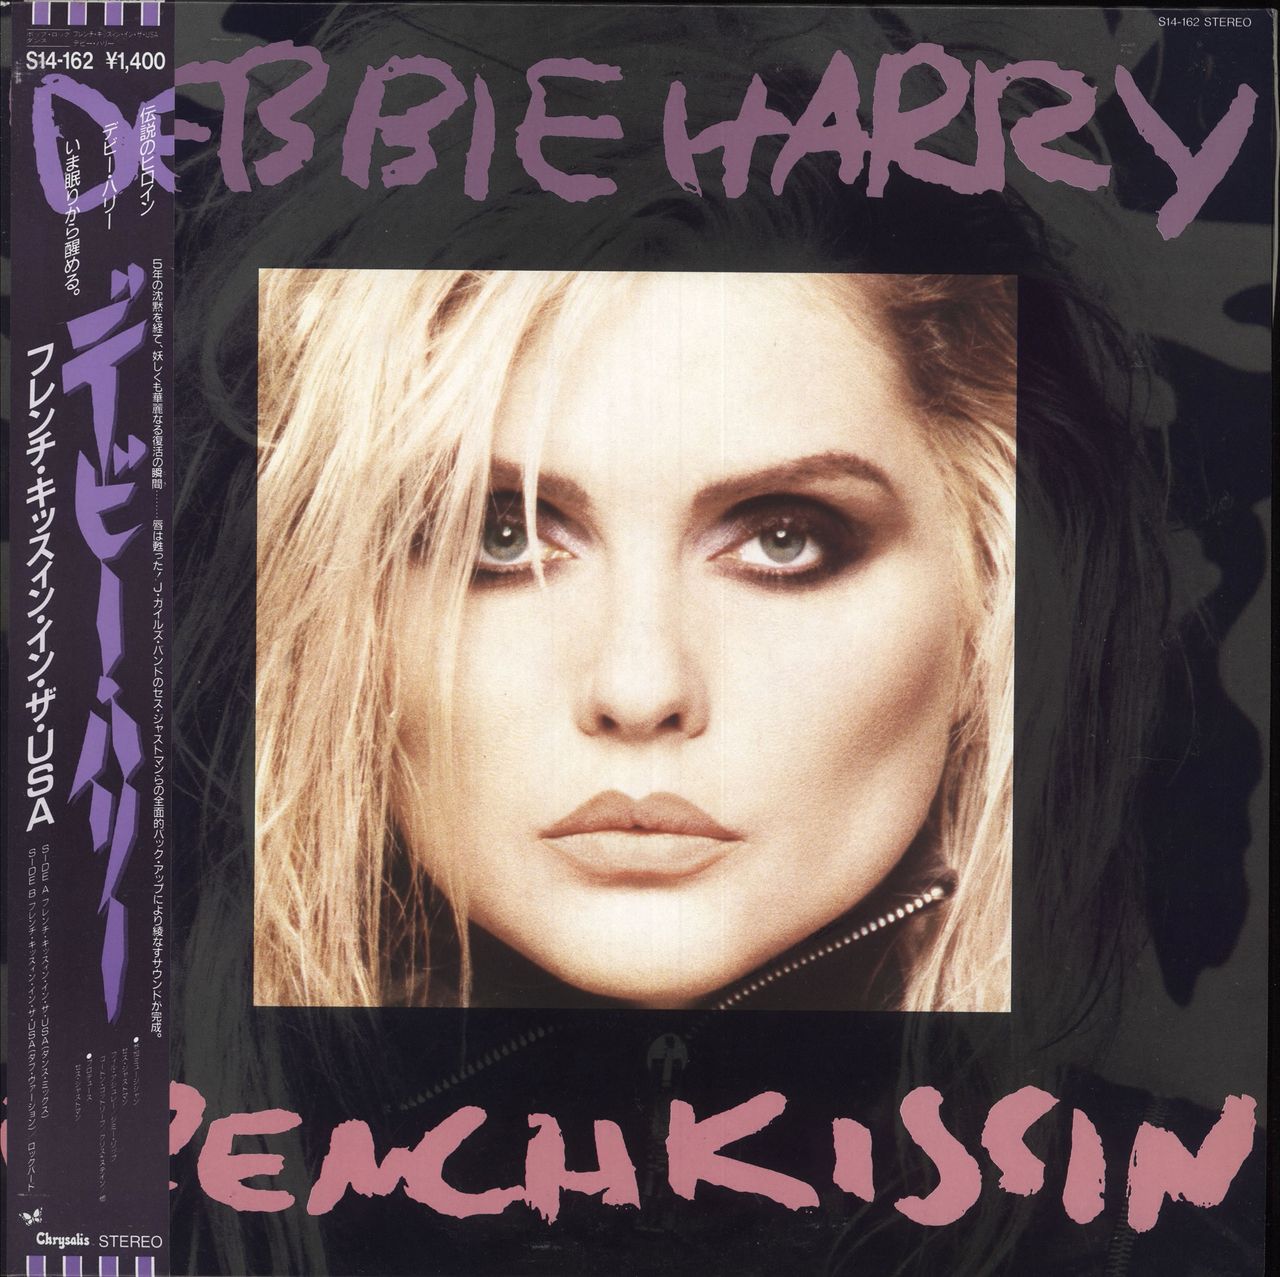 Debbie Harry French Kissin' In The USA Japanese Promo 12" vinyl single (12 inch record / Maxi-single) S14-162